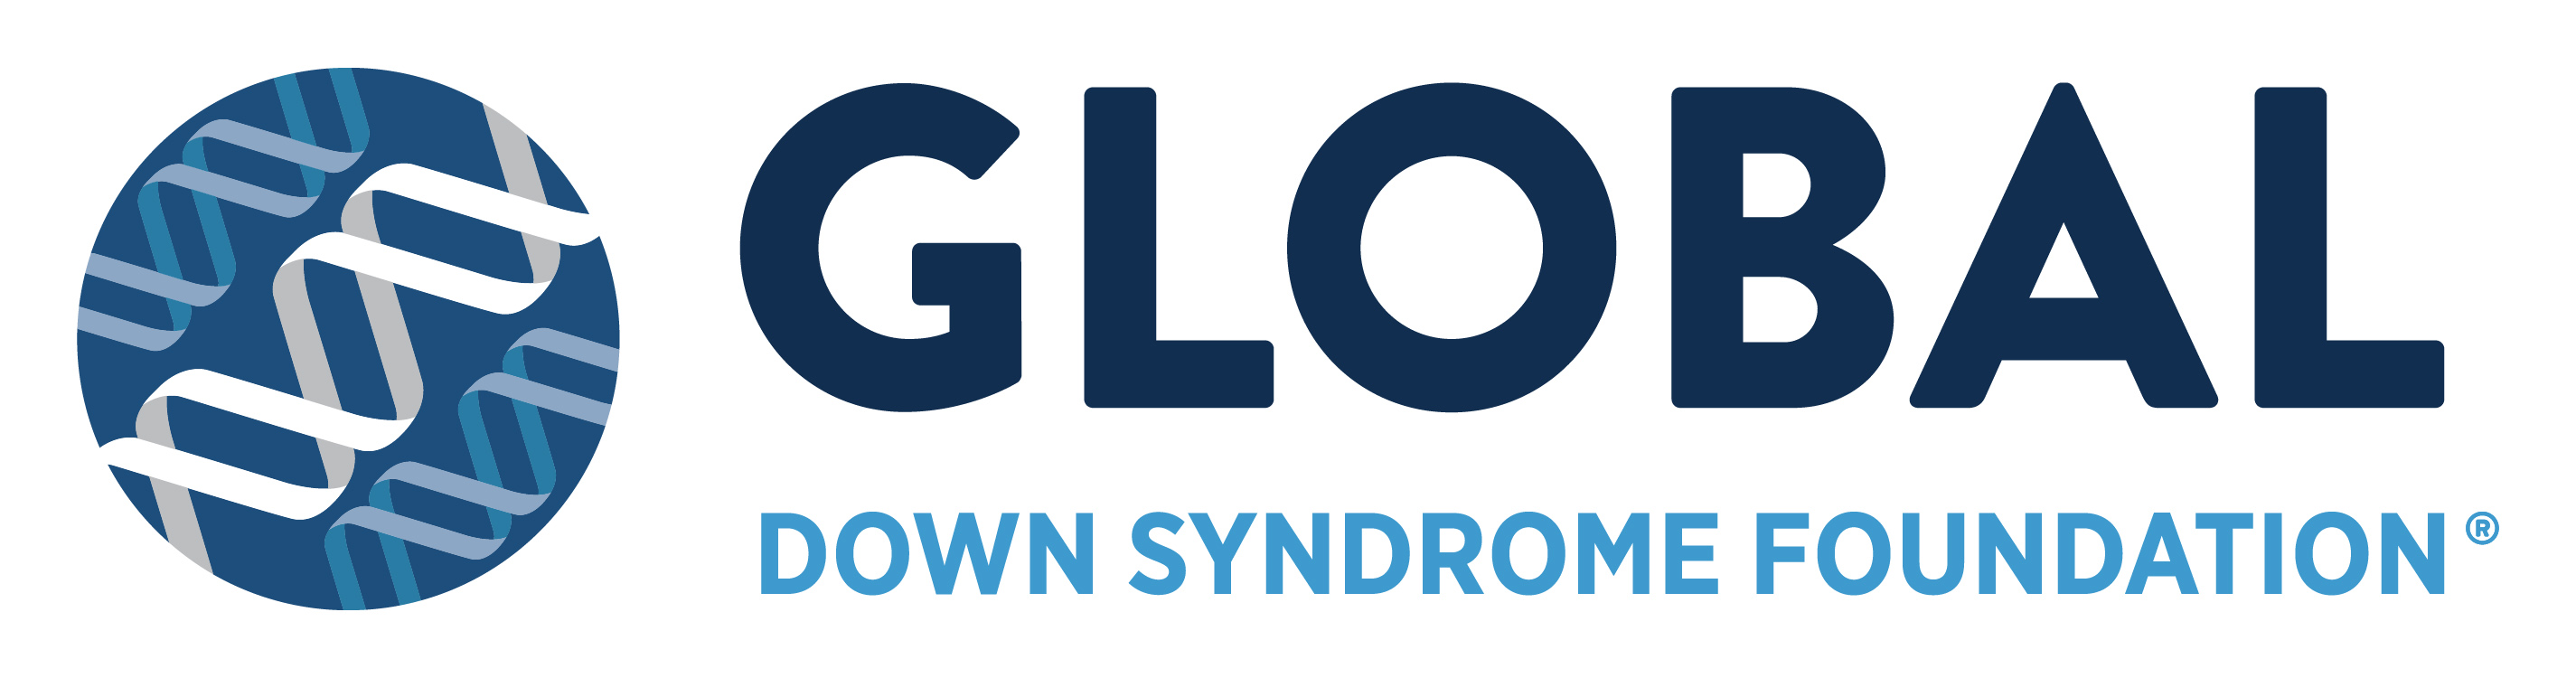 Down Syndrome World - Logo - https://s39939.pcdn.co/wp-content/uploads/2018/11/GDSF_FULL-COLOR-HORIZONTAL-PRIMARY-LOGO-RGB.jpg